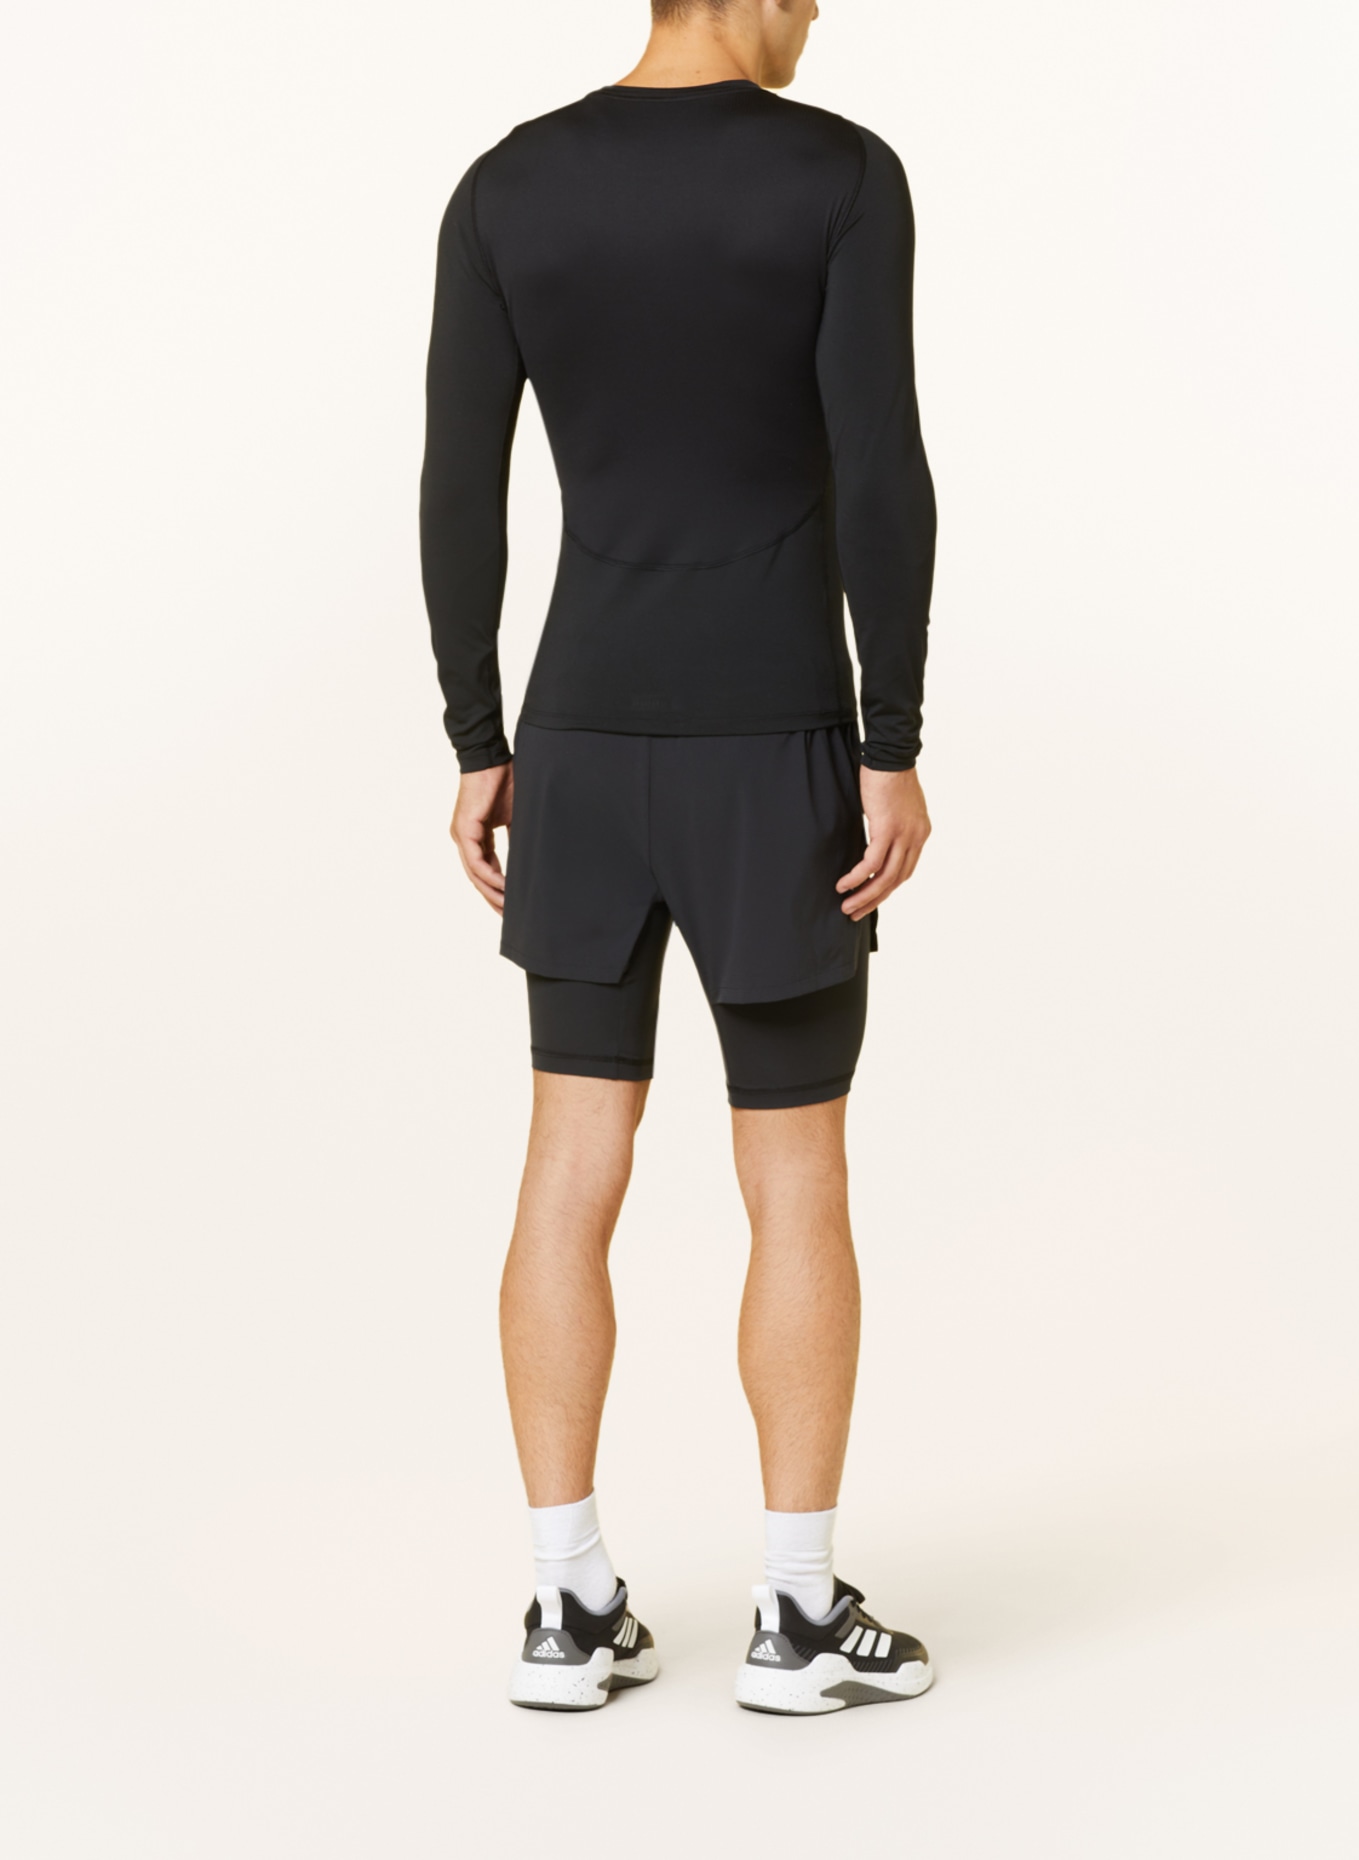 adidas HIIT HEAT.RDY Training 2-in-1 Shorts - Black, Women's Training